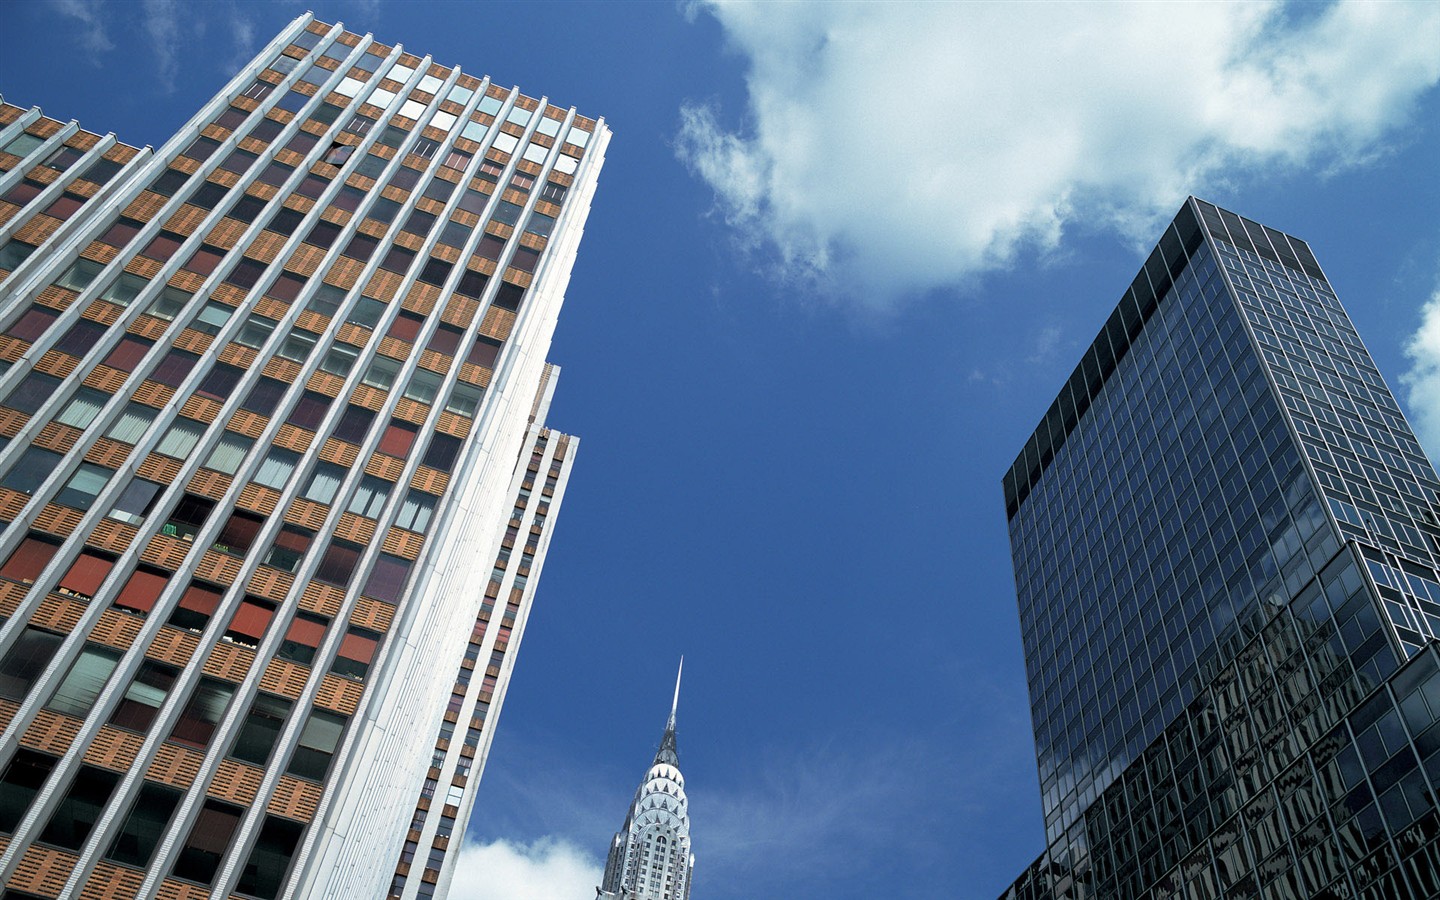 Quirligen Stadt New York Building #4 - 1440x900